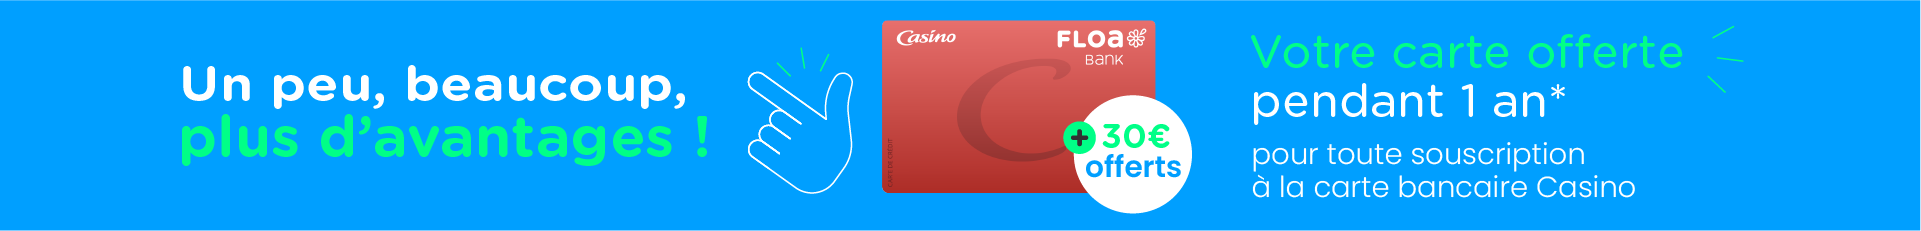 carte bancaire casino